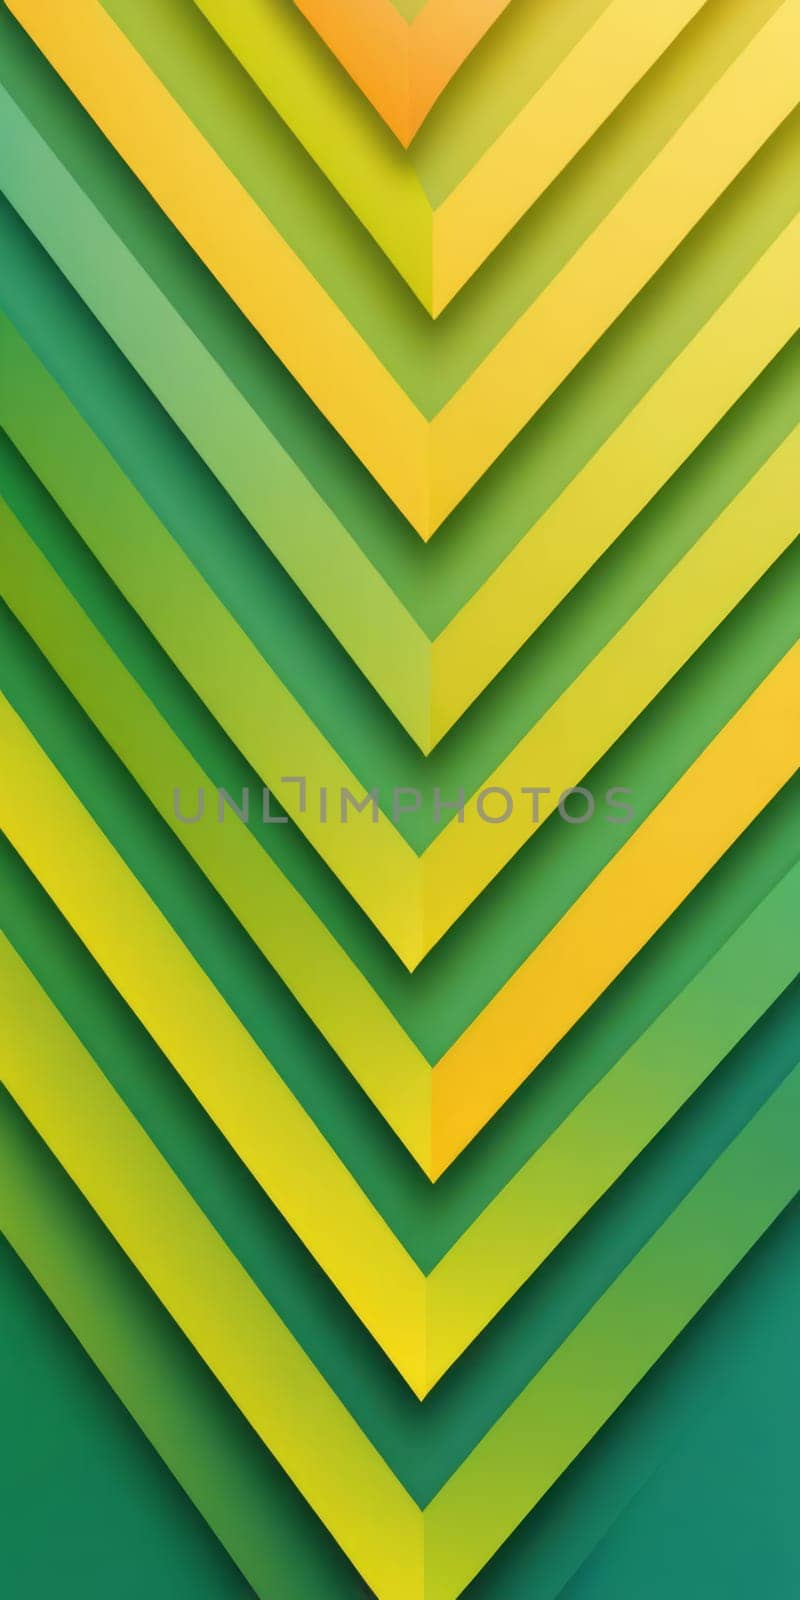 Arrow Shapes in Yellow Mediumspringgreen by nkotlyar